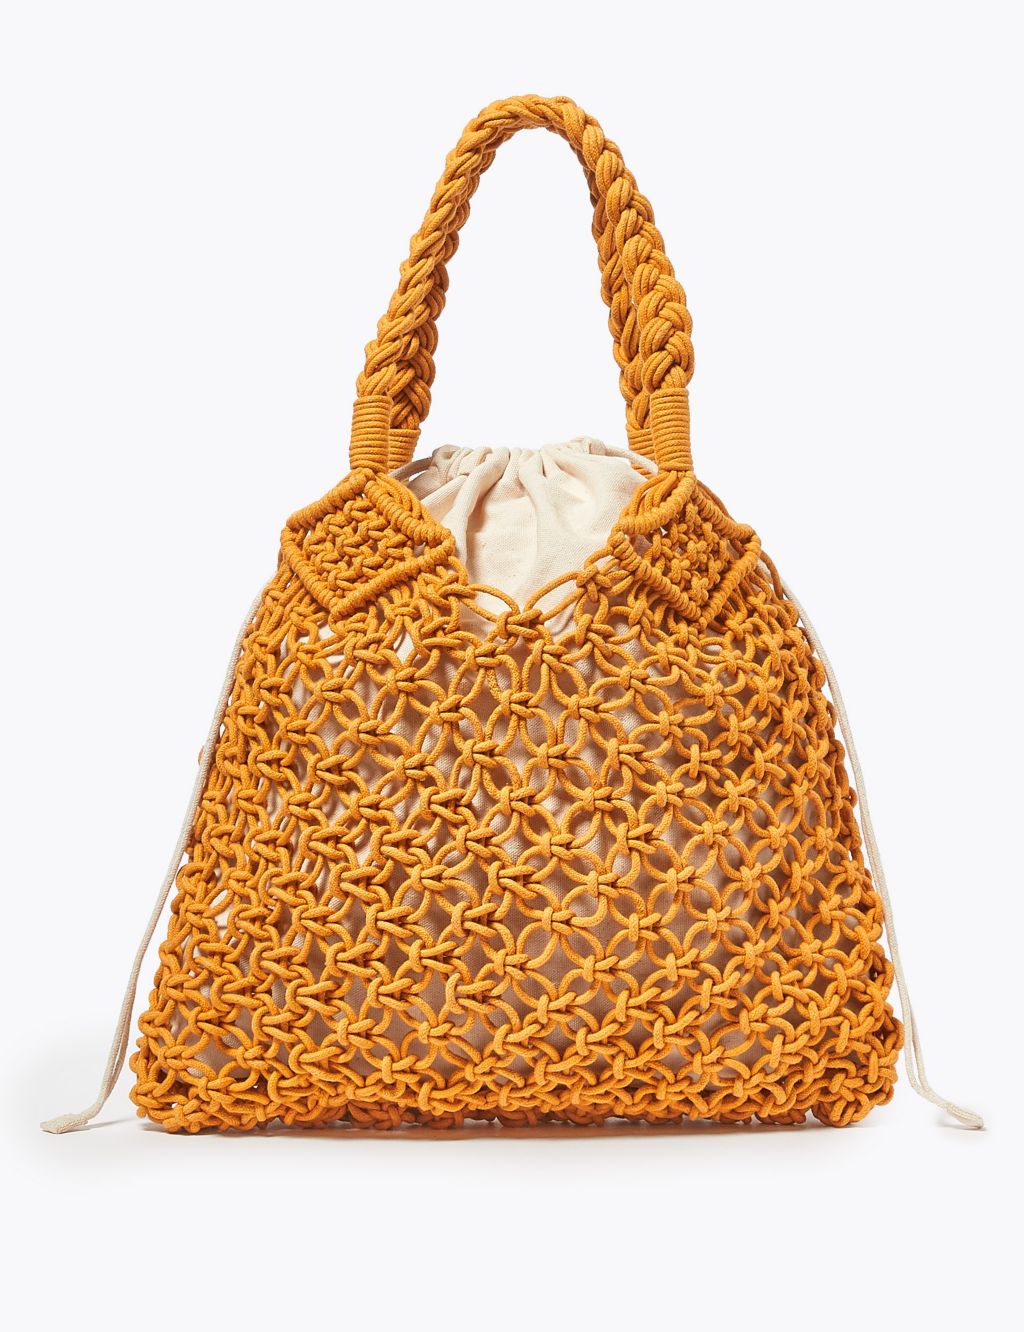 Cotton Rich Macrame Hobo Bag | M&S Collection | M&S